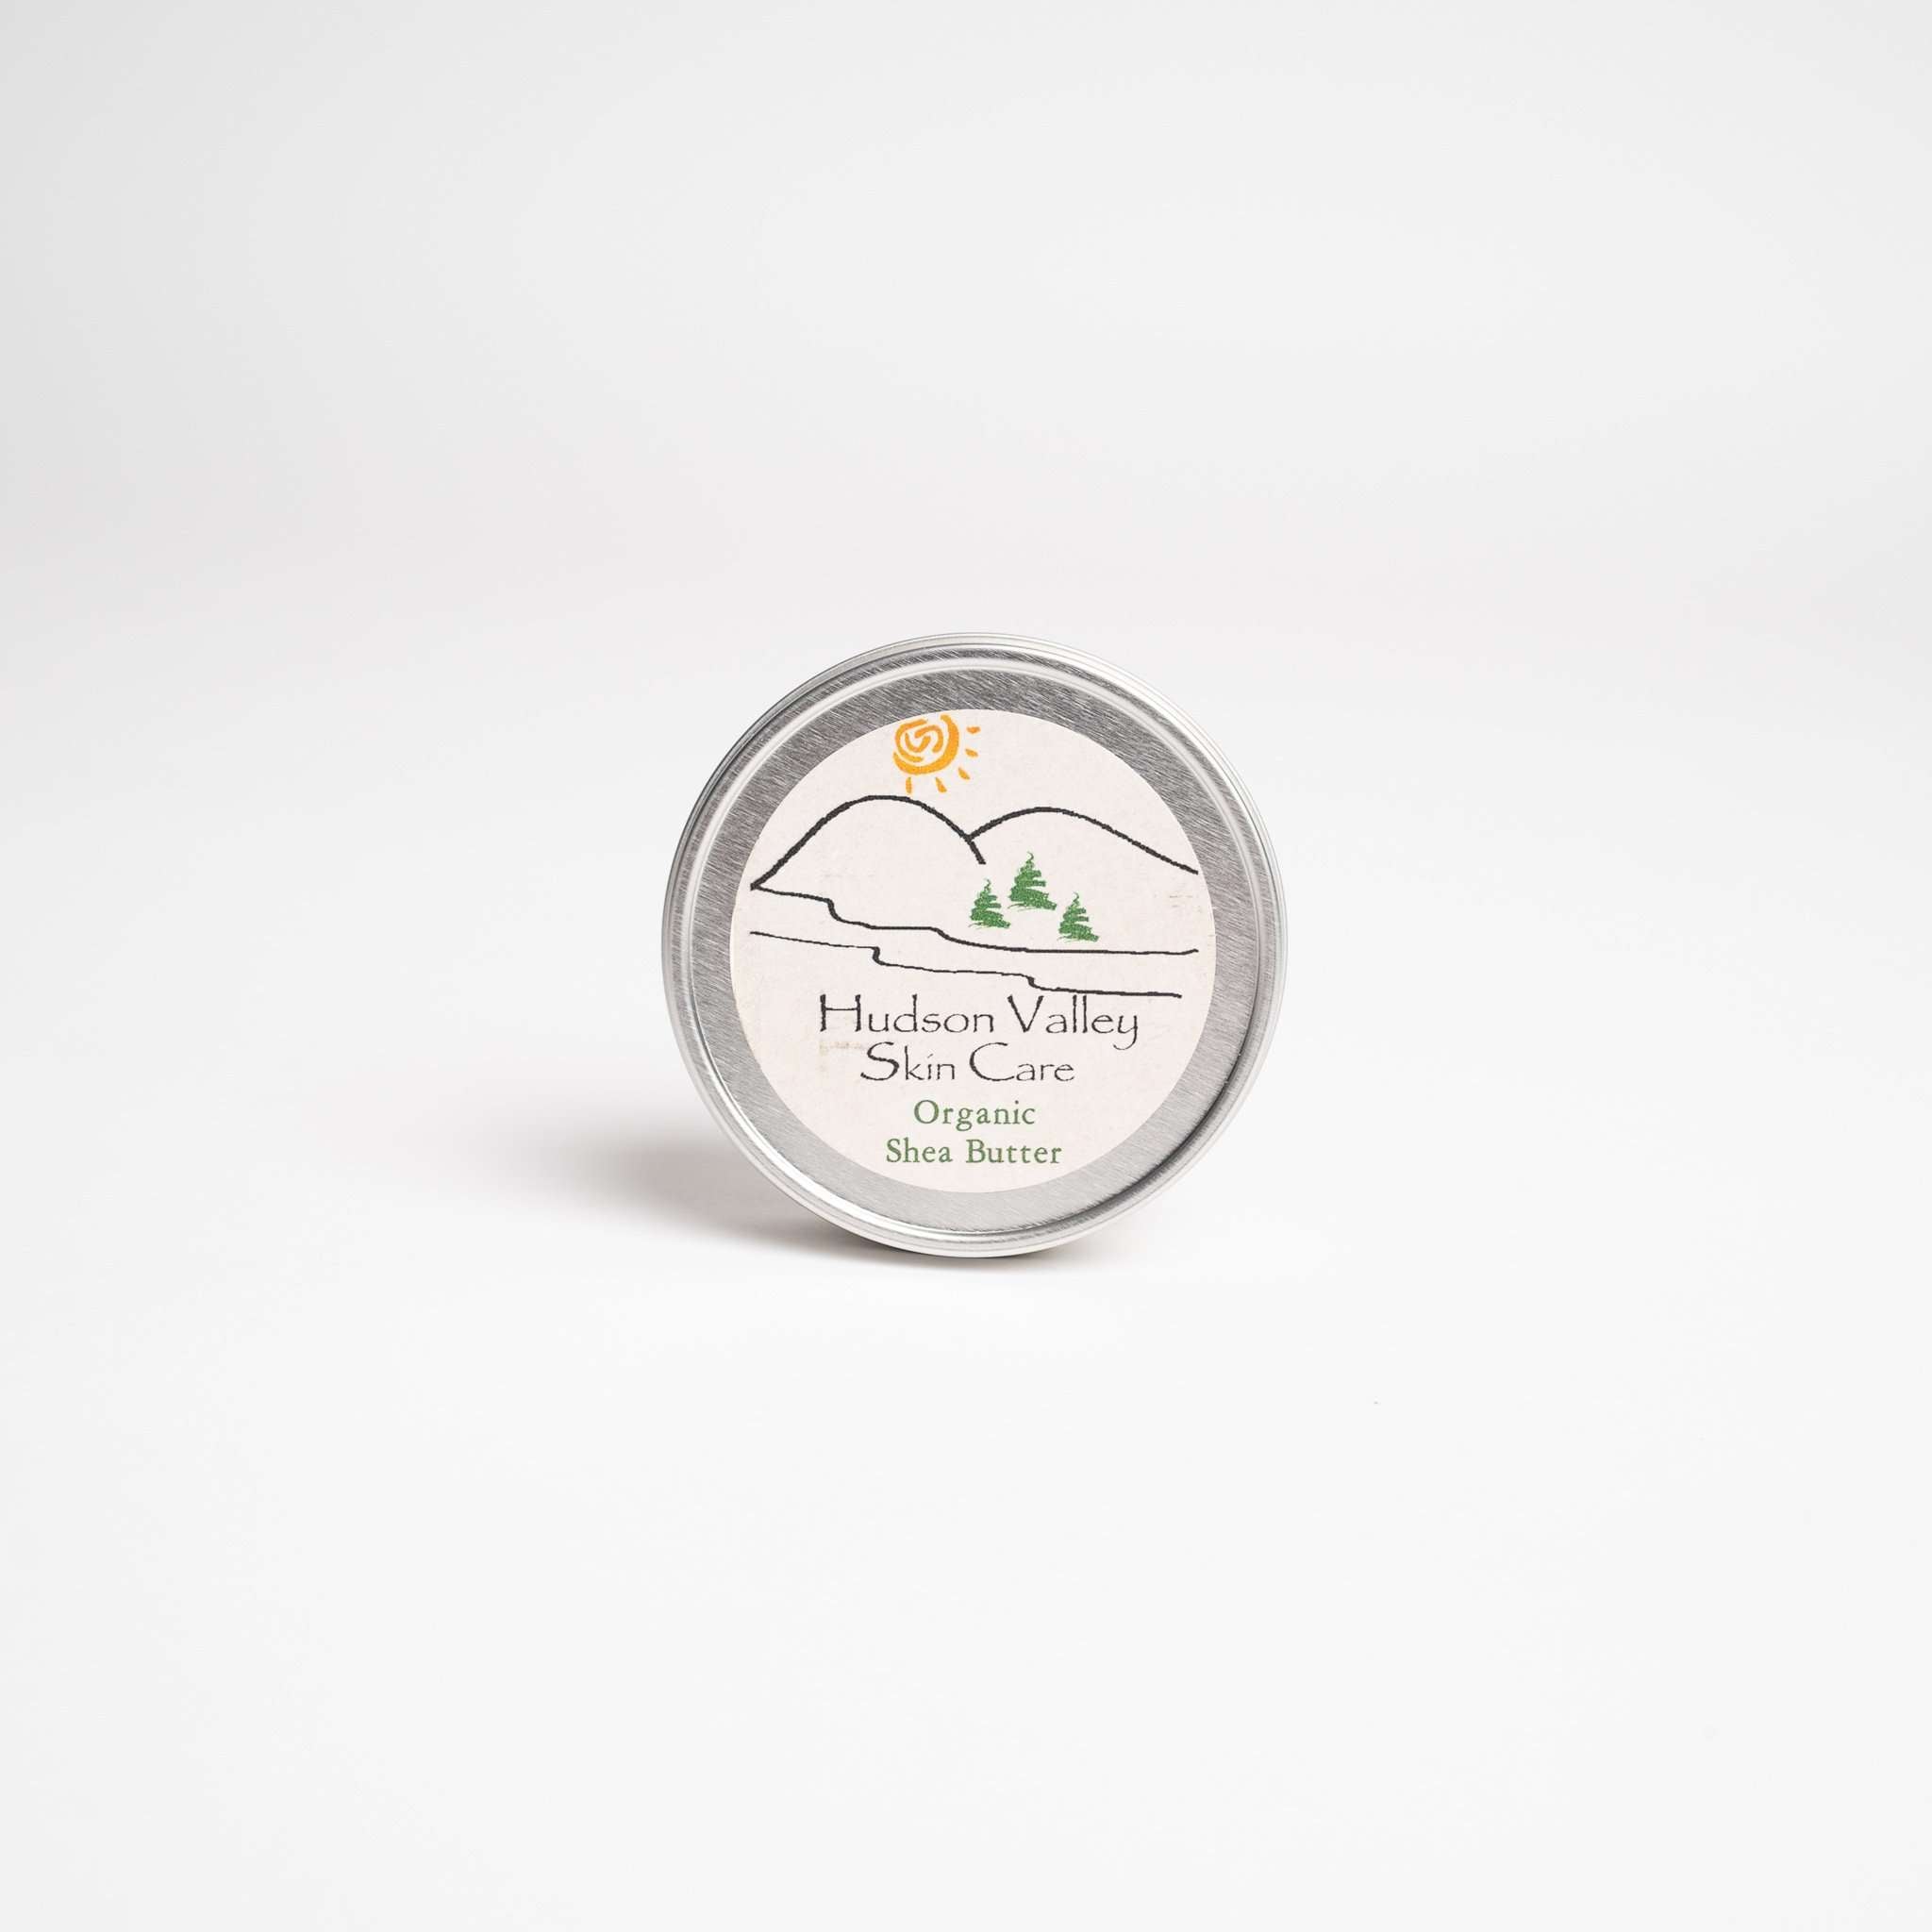 Organic Shea Butter - Hudson Valley Skin Care